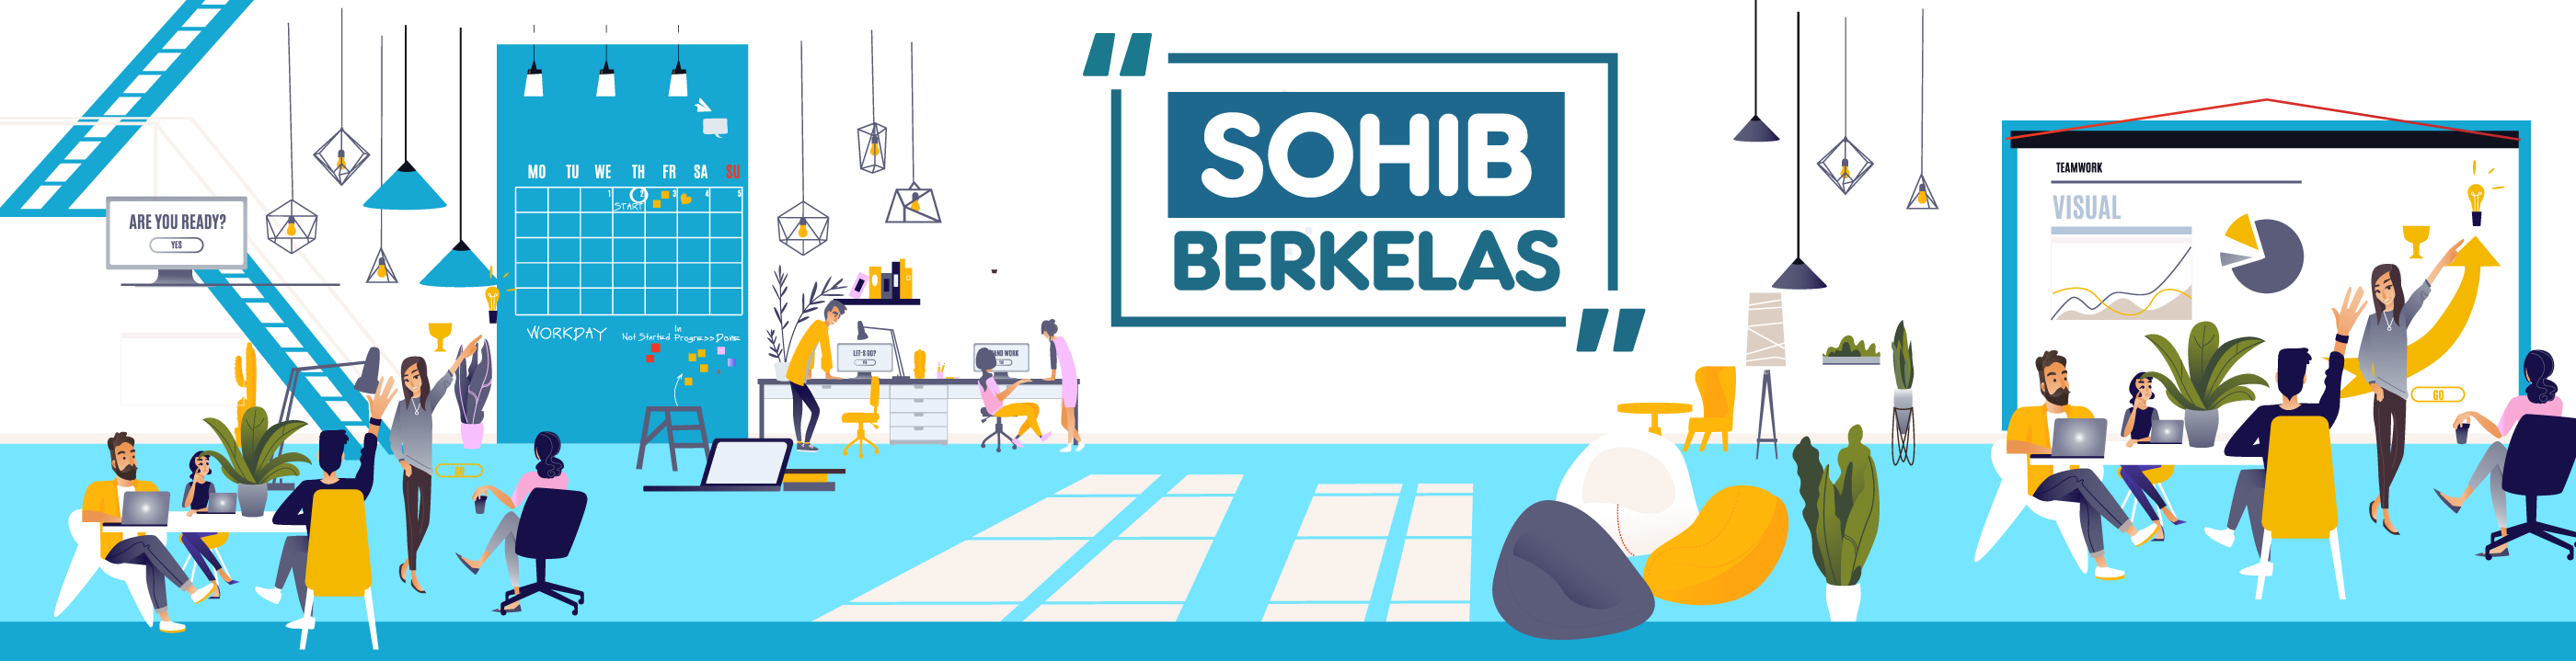 Sohib Berkelas Bandung_banner_1535429390_sohib_offline.png